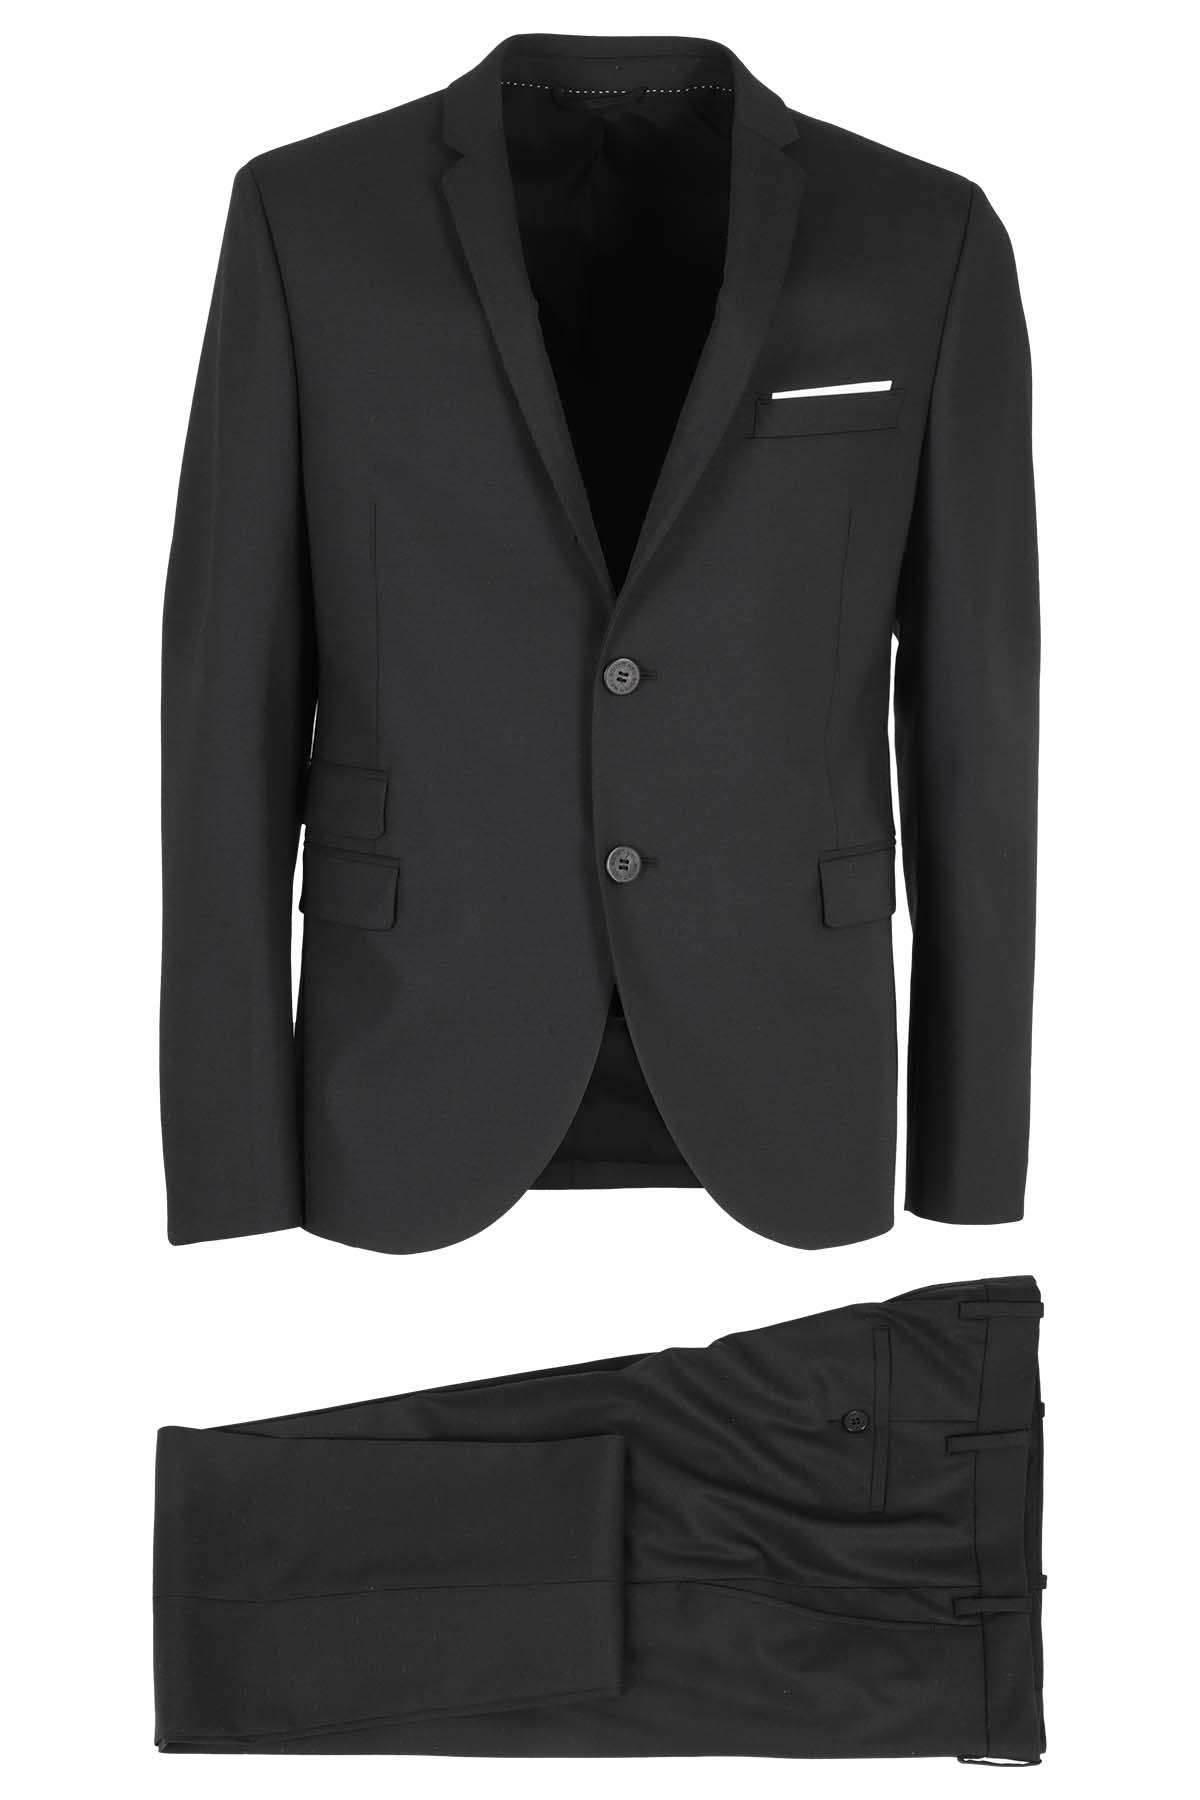 Neil Barrett Slim Lined Suit